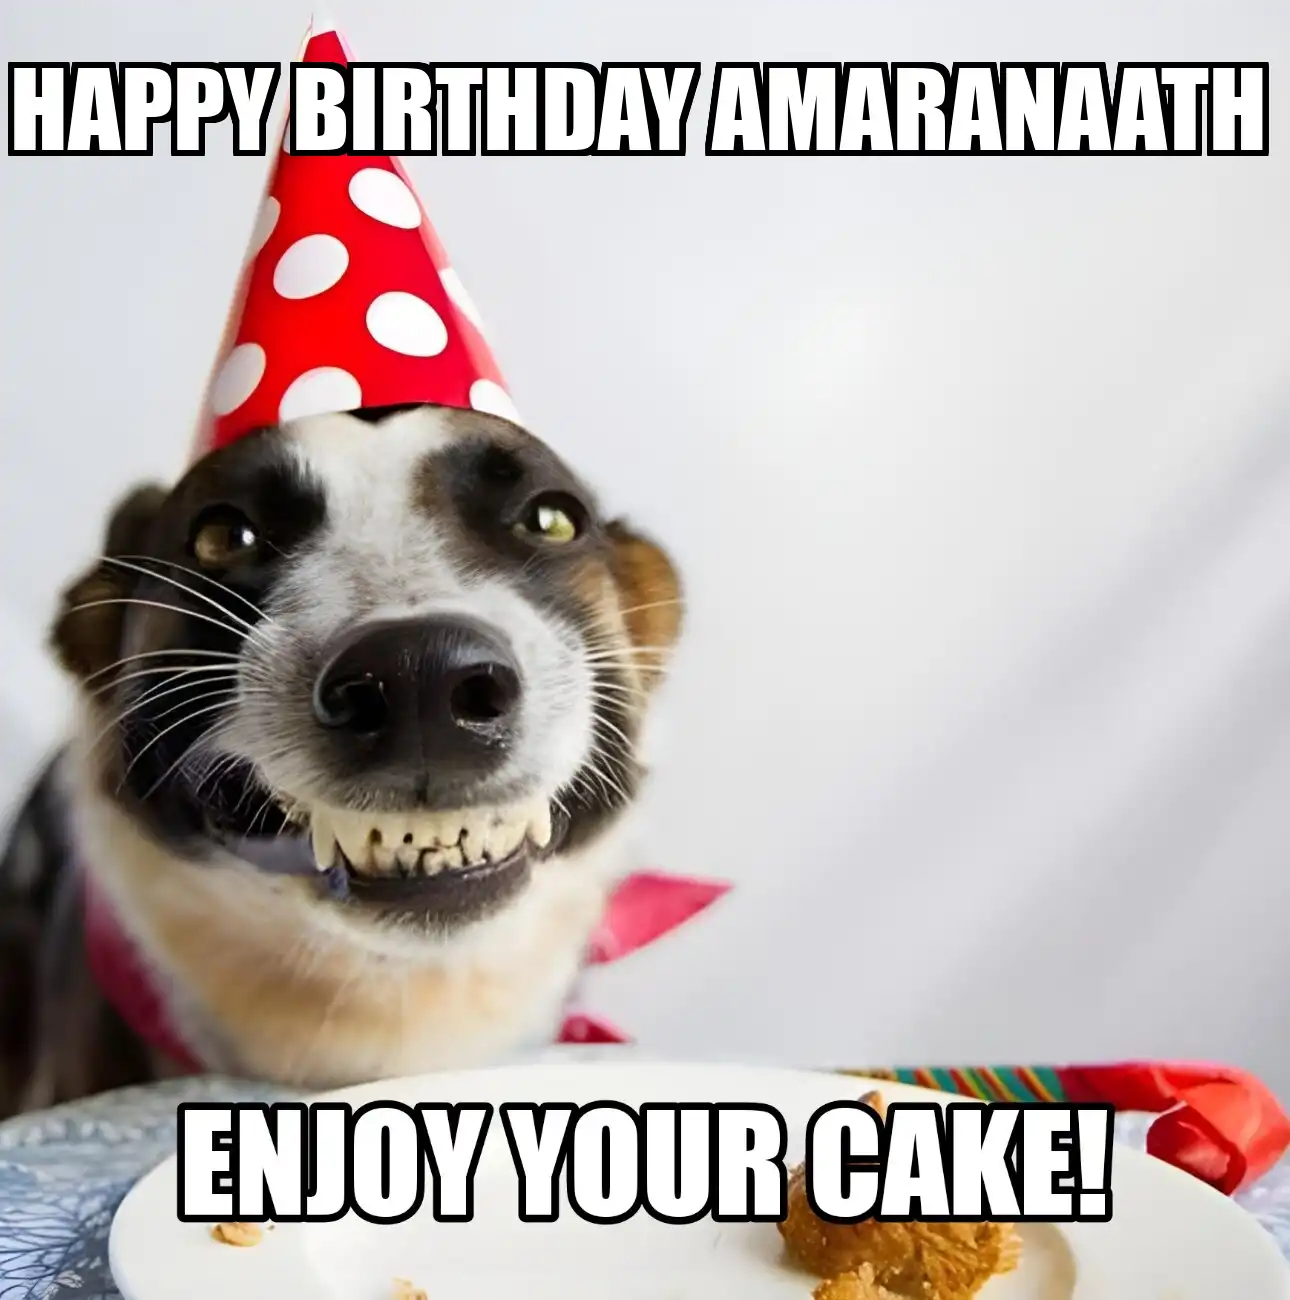 Happy Birthday Amaranaath Enjoy Your Cake Dog Meme